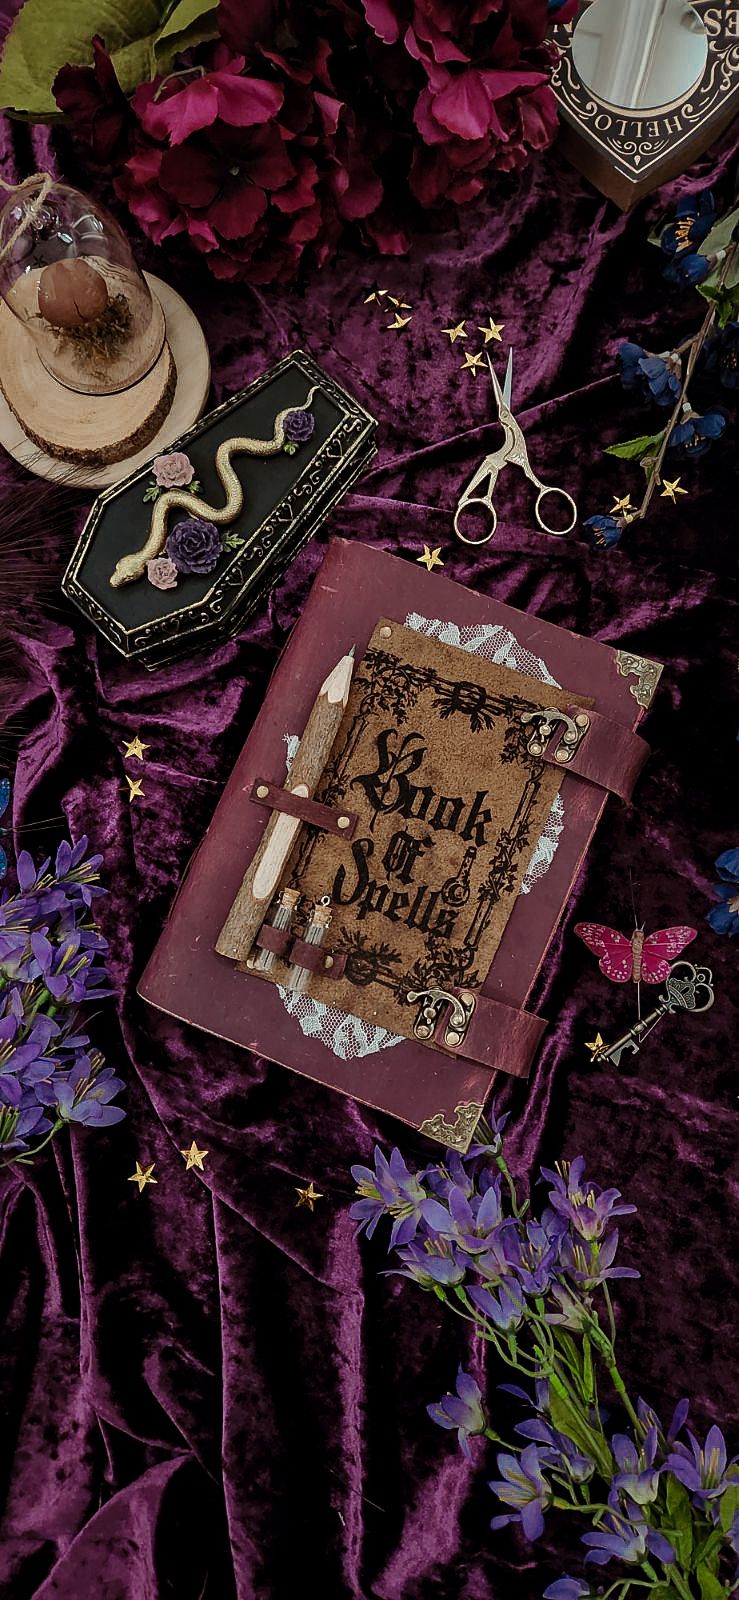 Book of spells Leather Journal & Sketchbook